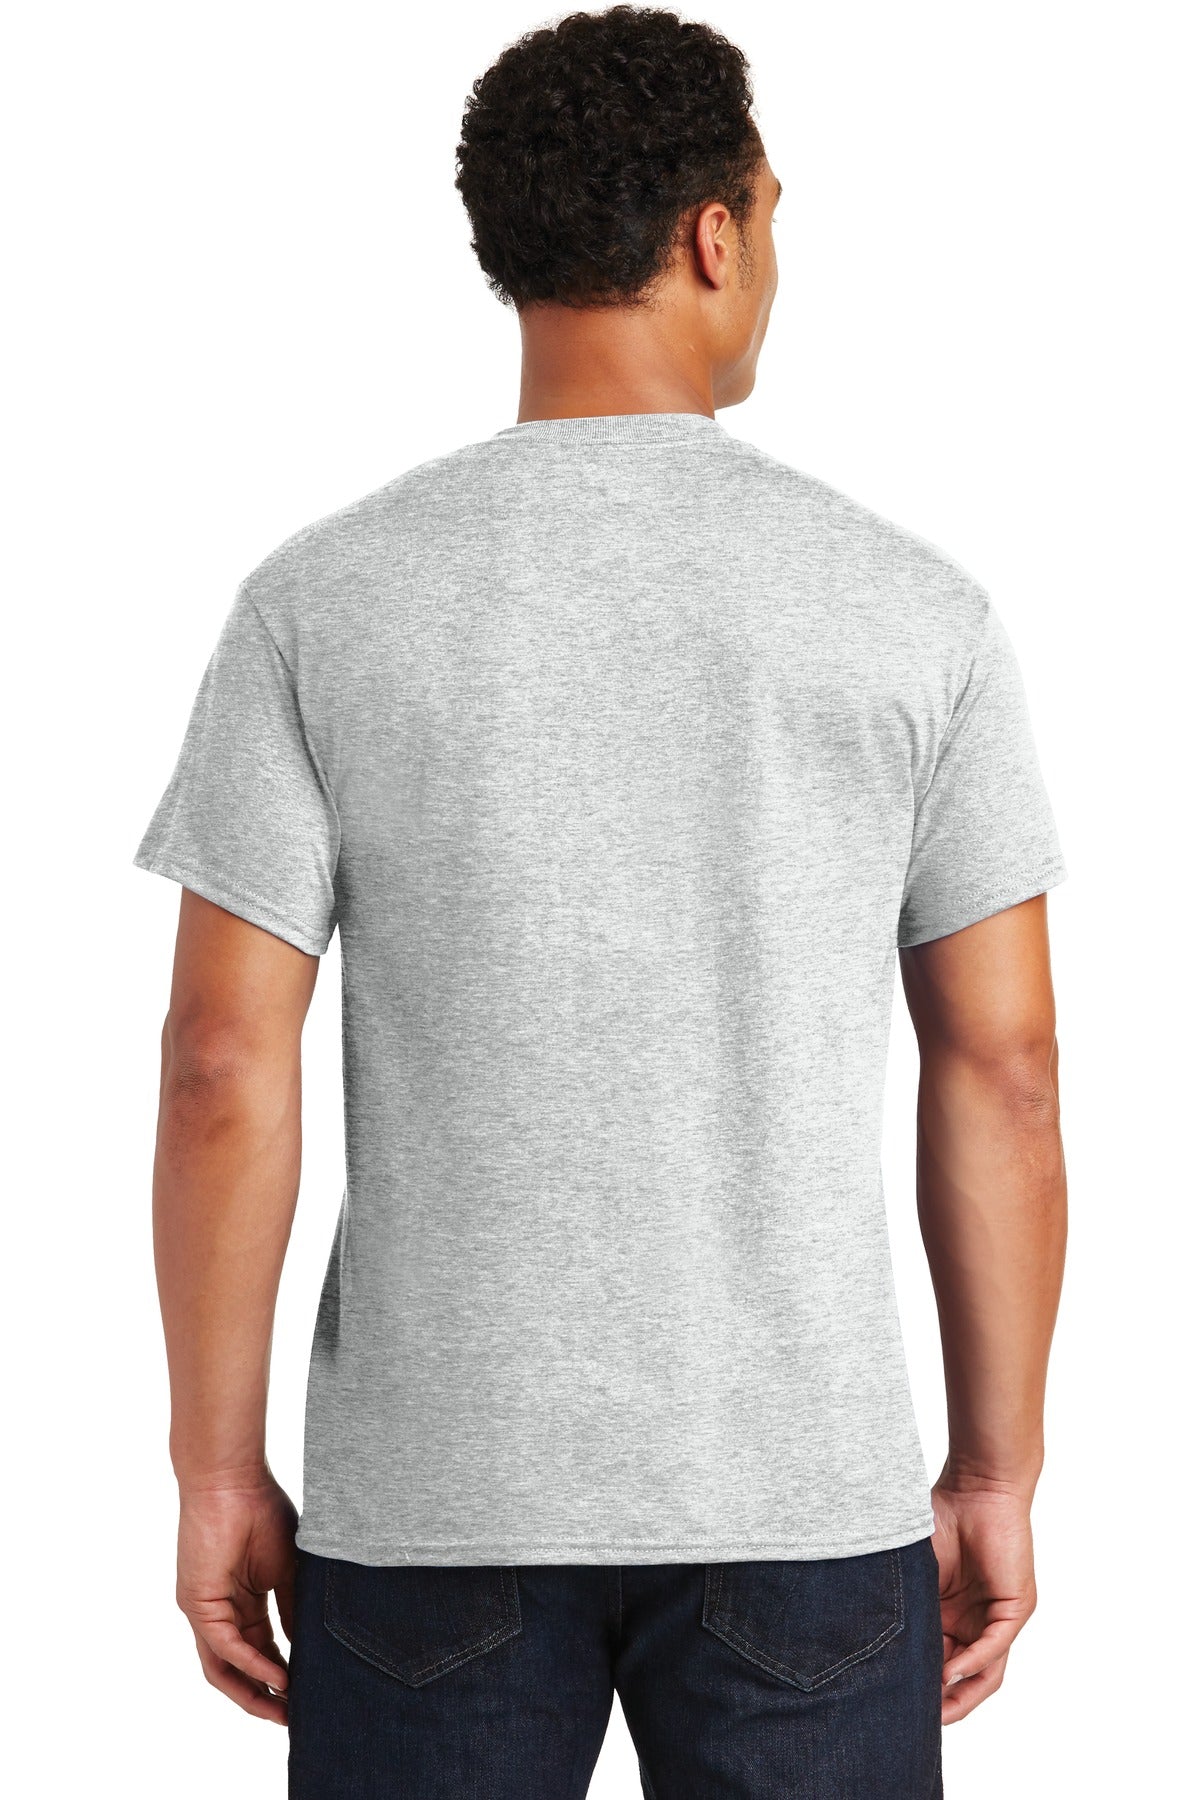 Gildan® - DryBlend® 50 Cotton/50 Poly T-Shirt. 8000 [Ash] - DFW Impression